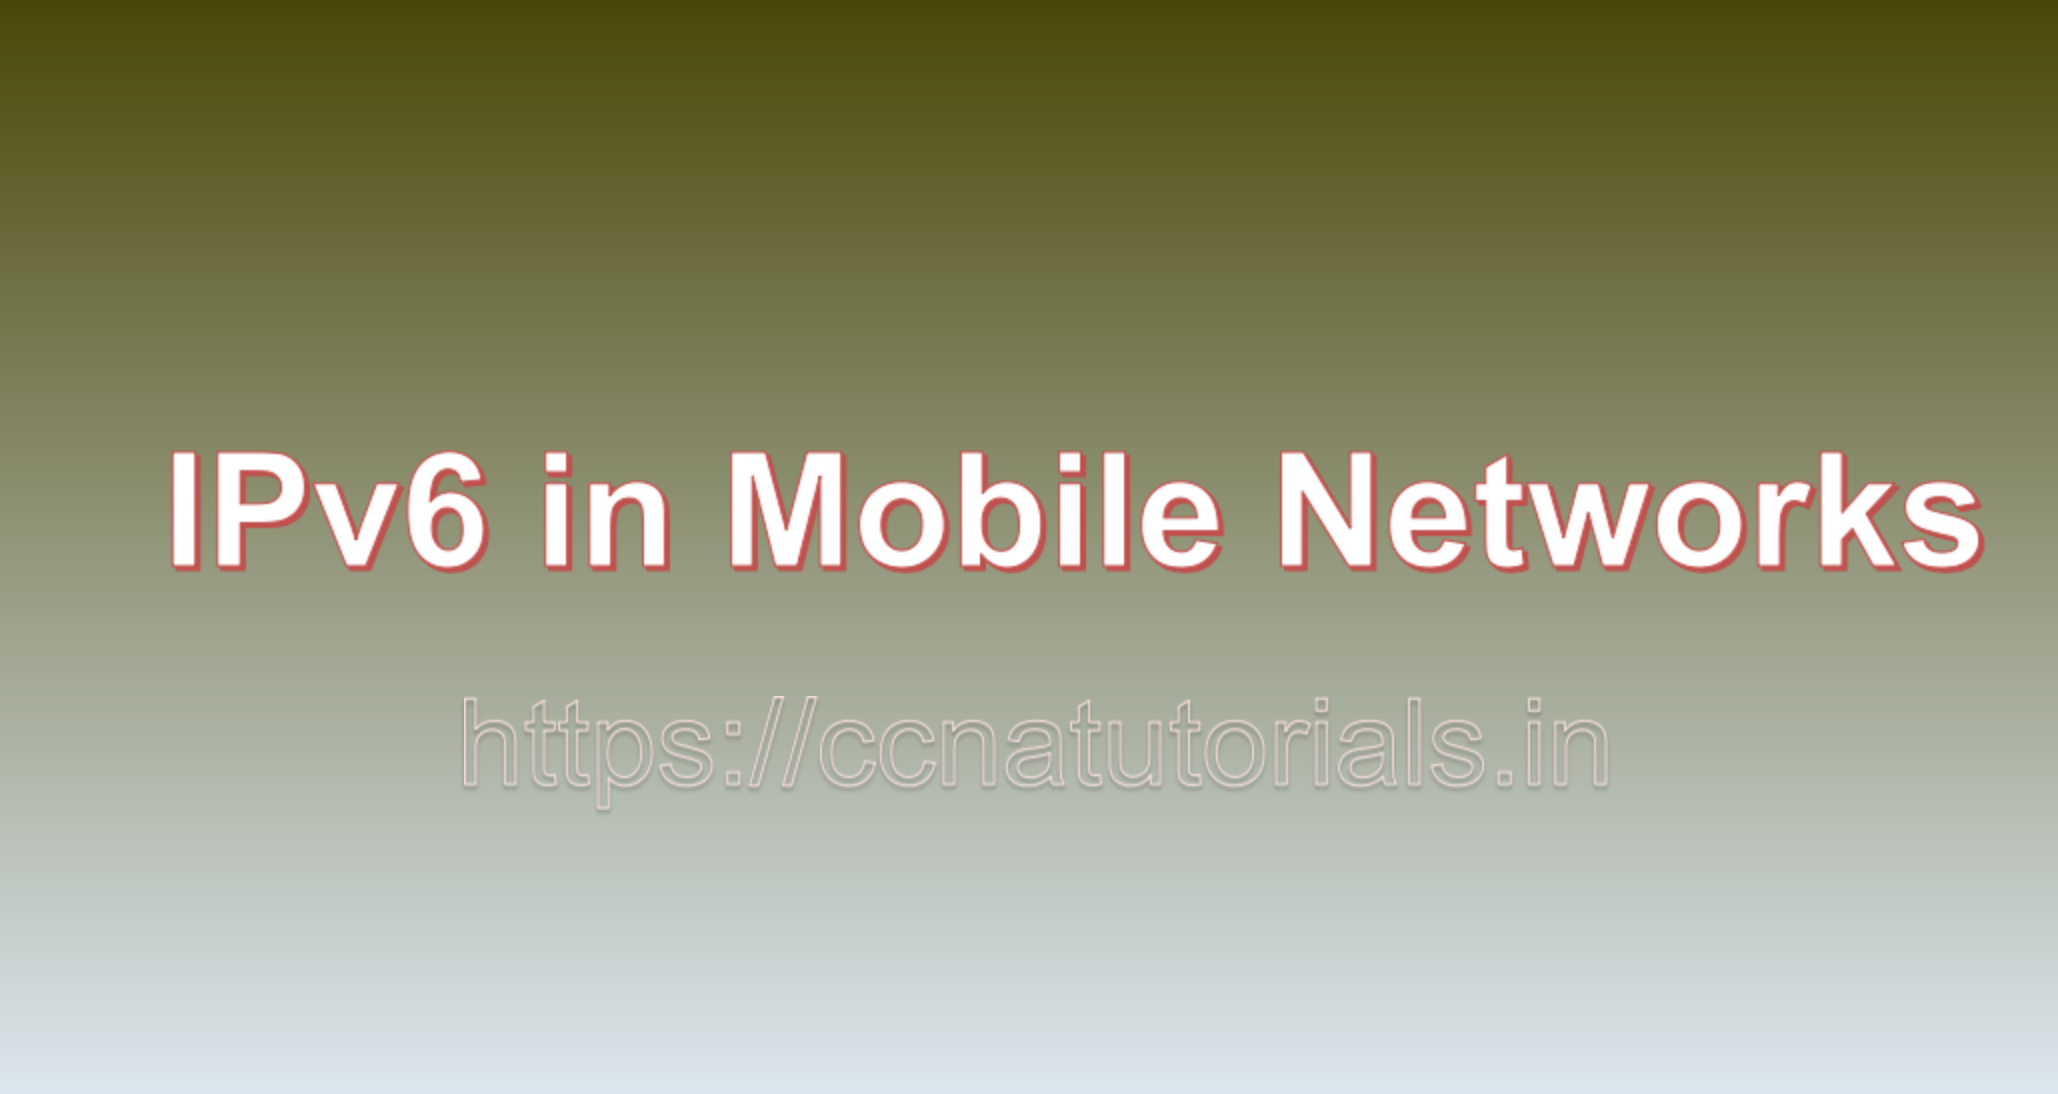 IPv6 in Mobile Networks, ccna, ccna tutorials